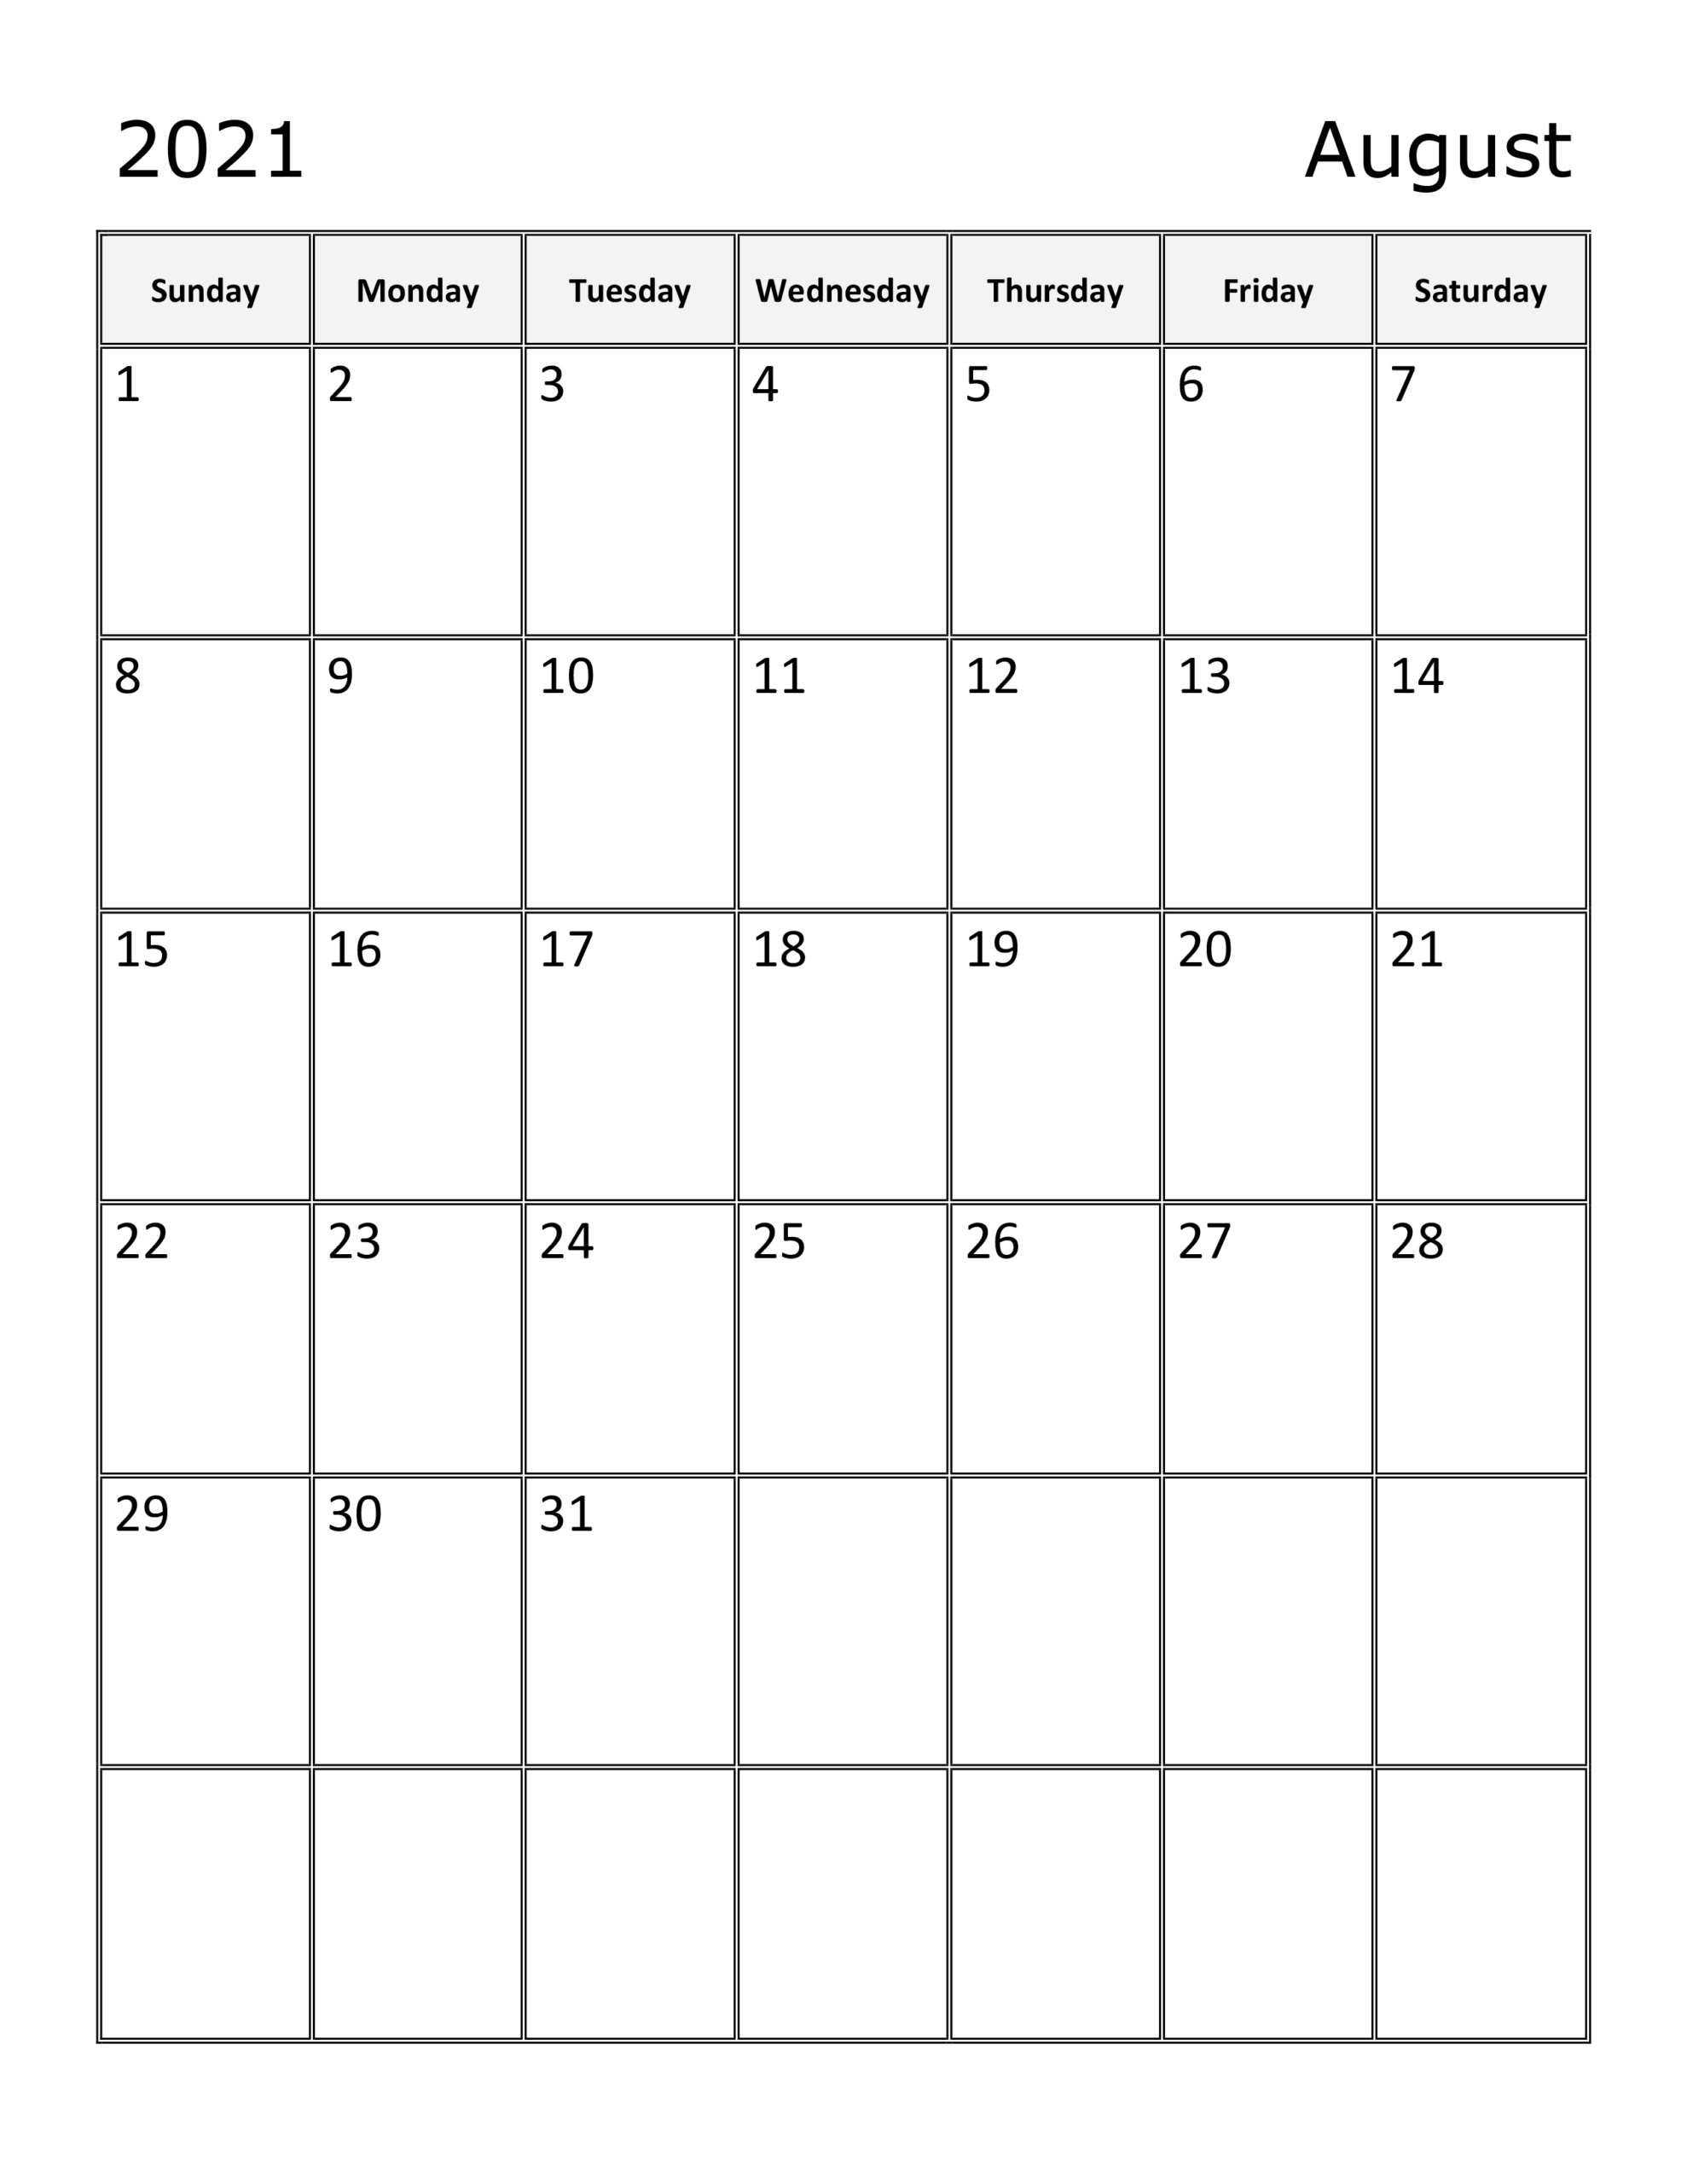 Calendar For August 2021  Freecalendar.su in Free Calendars 2021 Word Doc Printable August